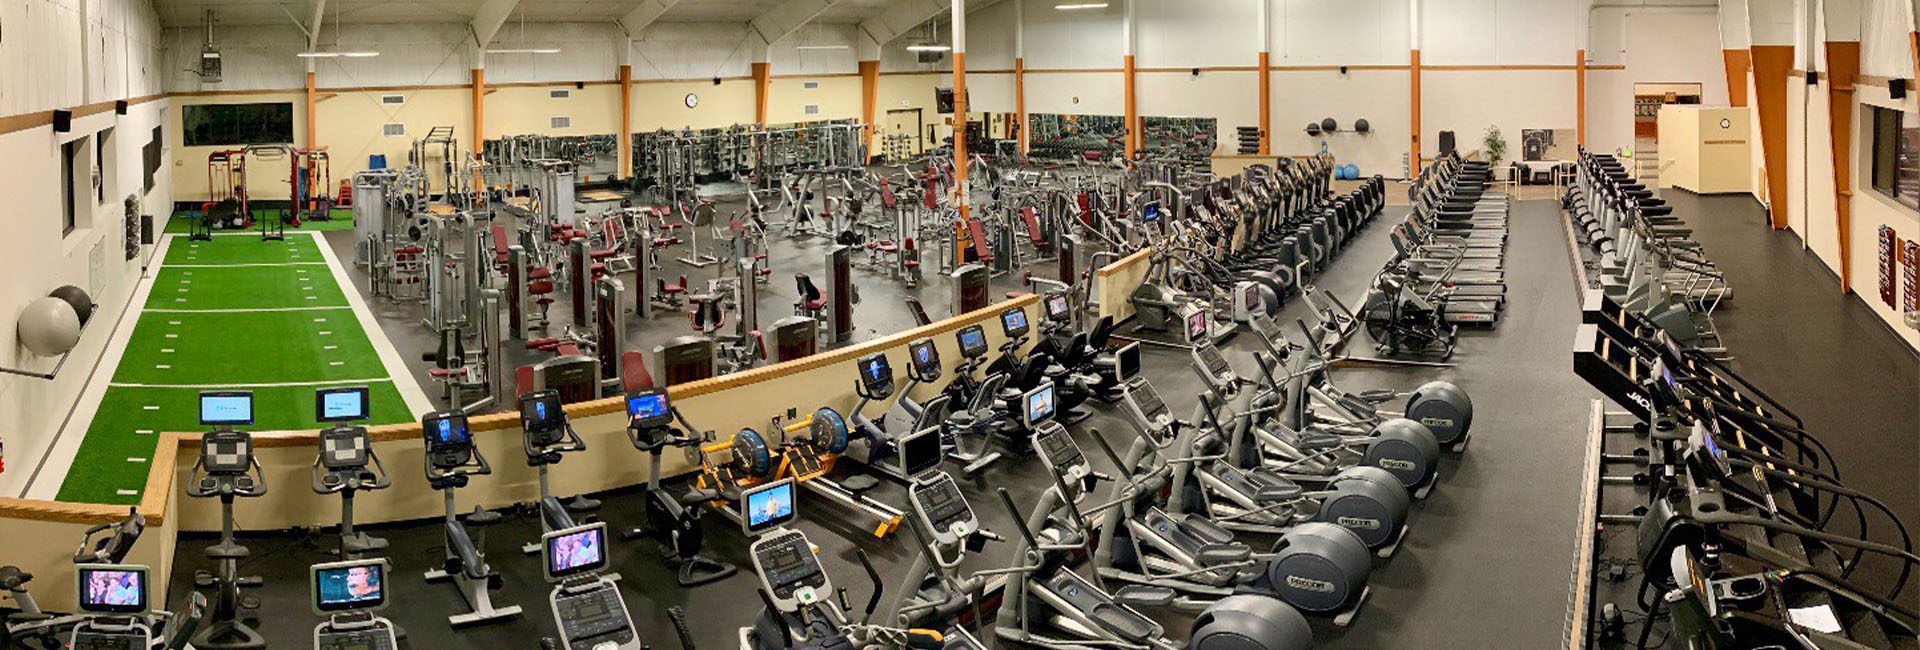 Spacious Large Gym Near Me Idahojpg